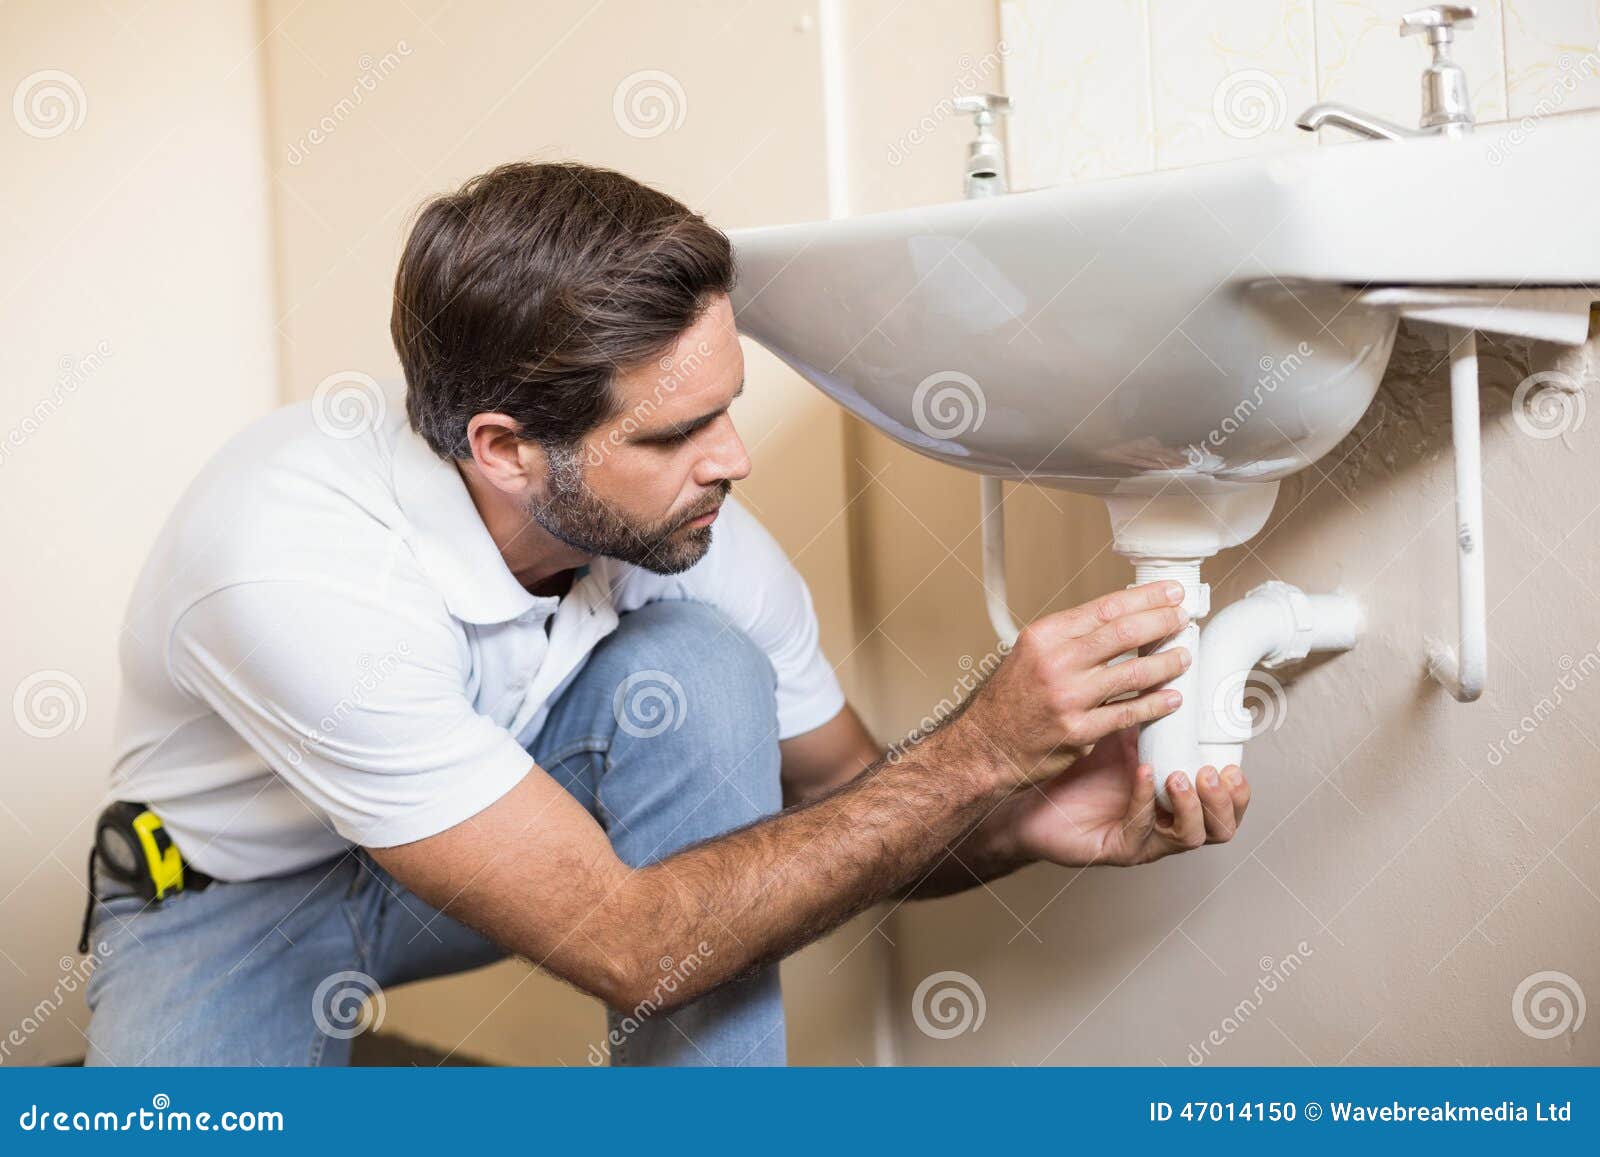 liquid plumber for bathroom sink